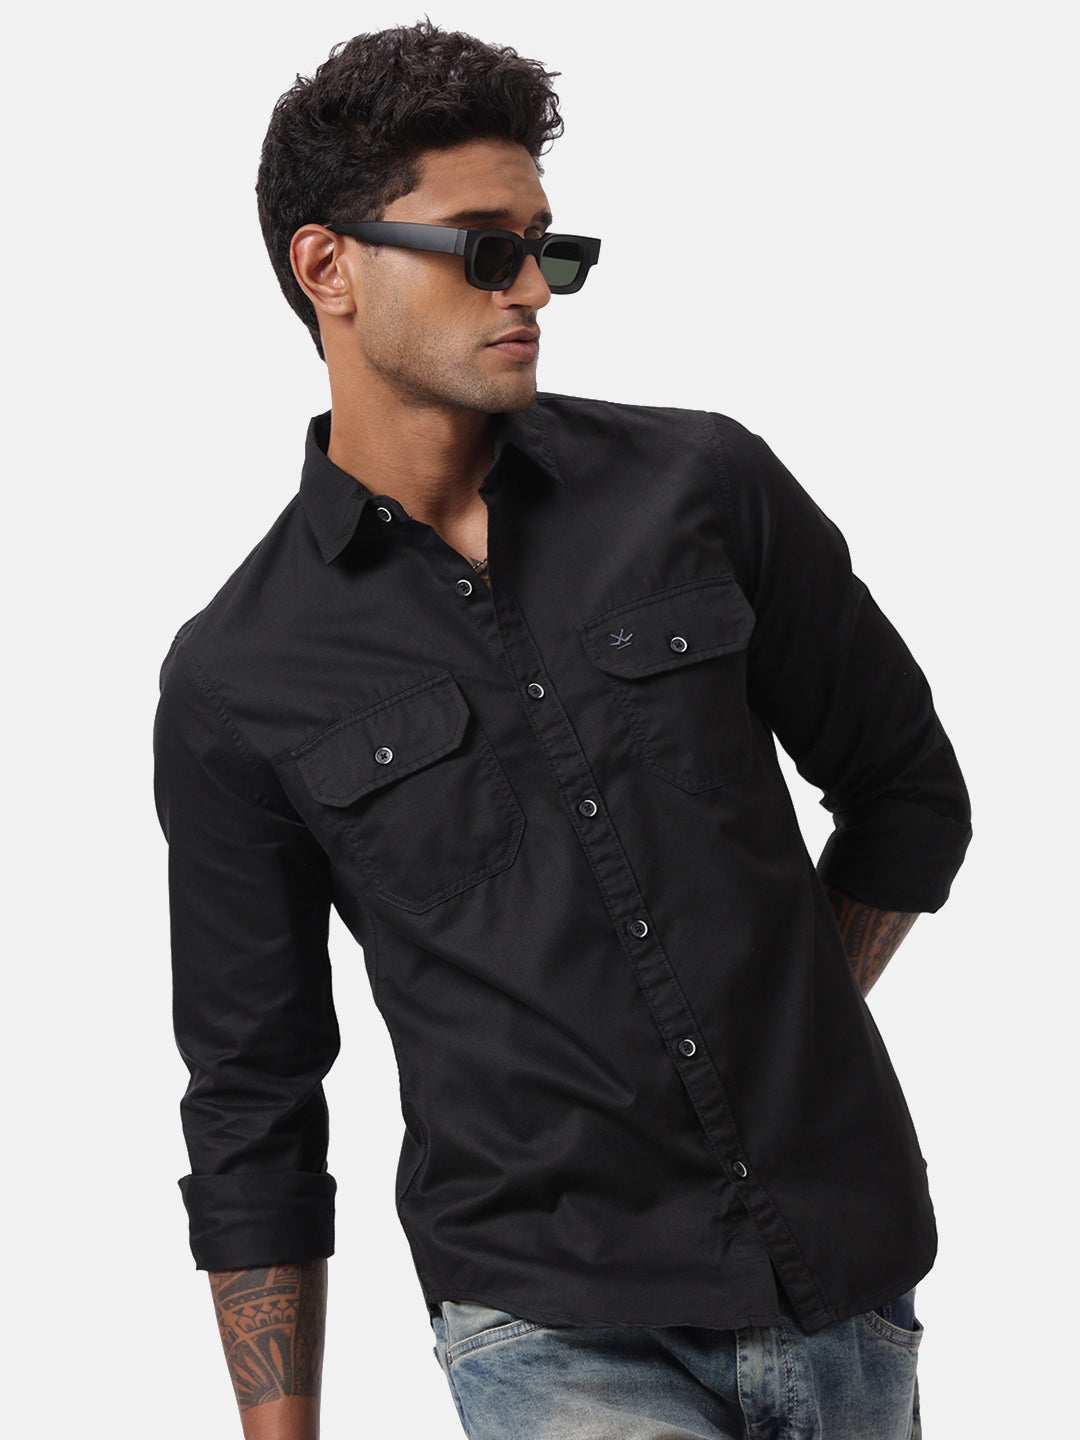 Basic Solid Black Shirt